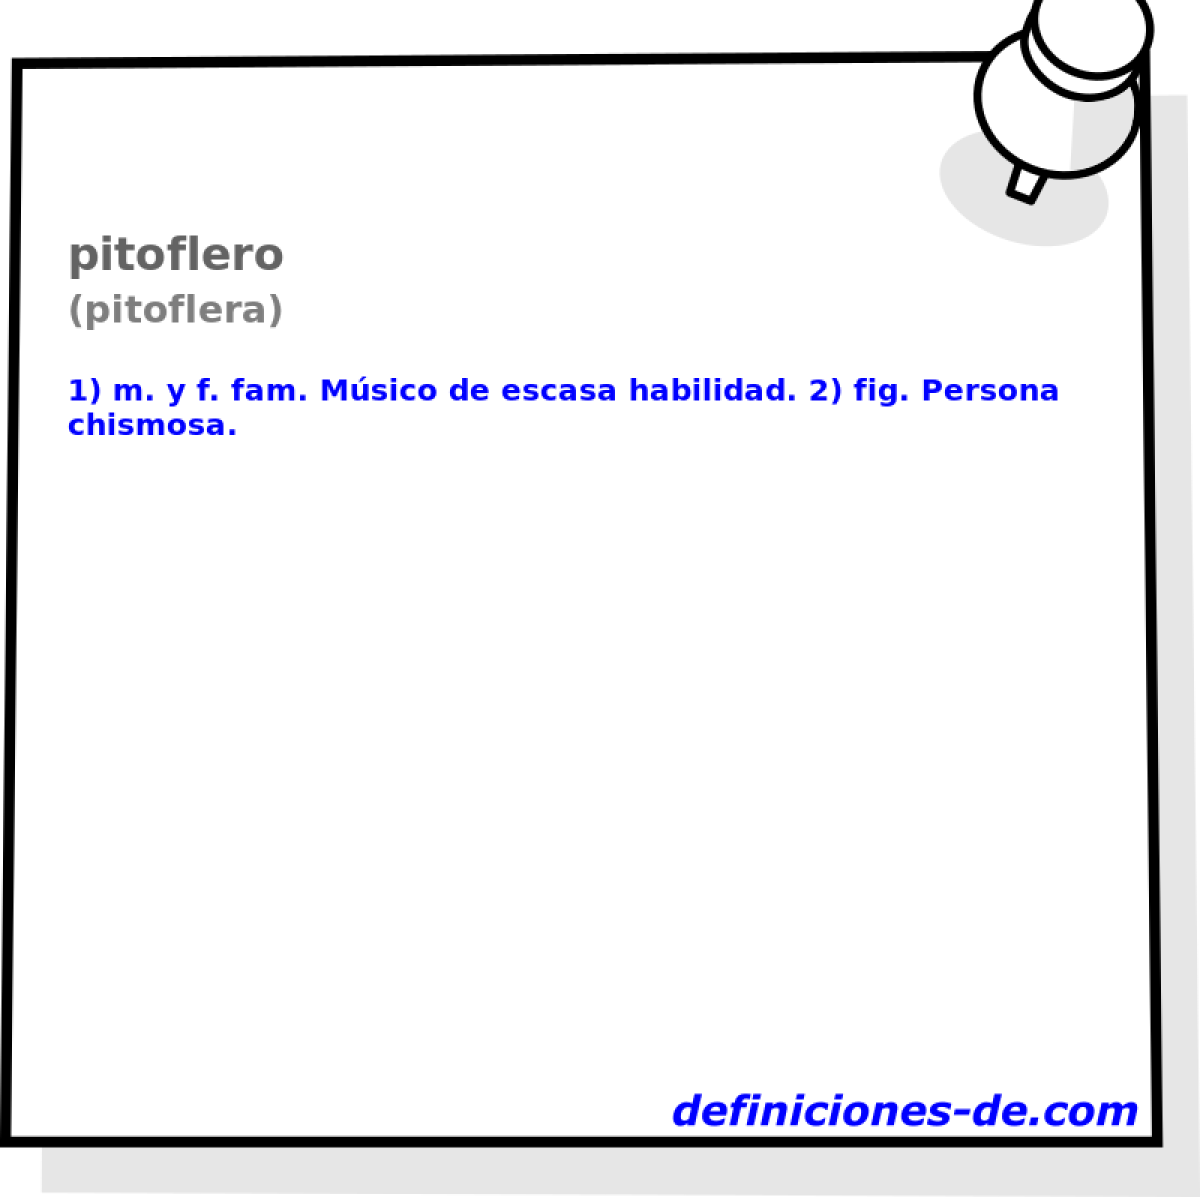 pitoflero (pitoflera)